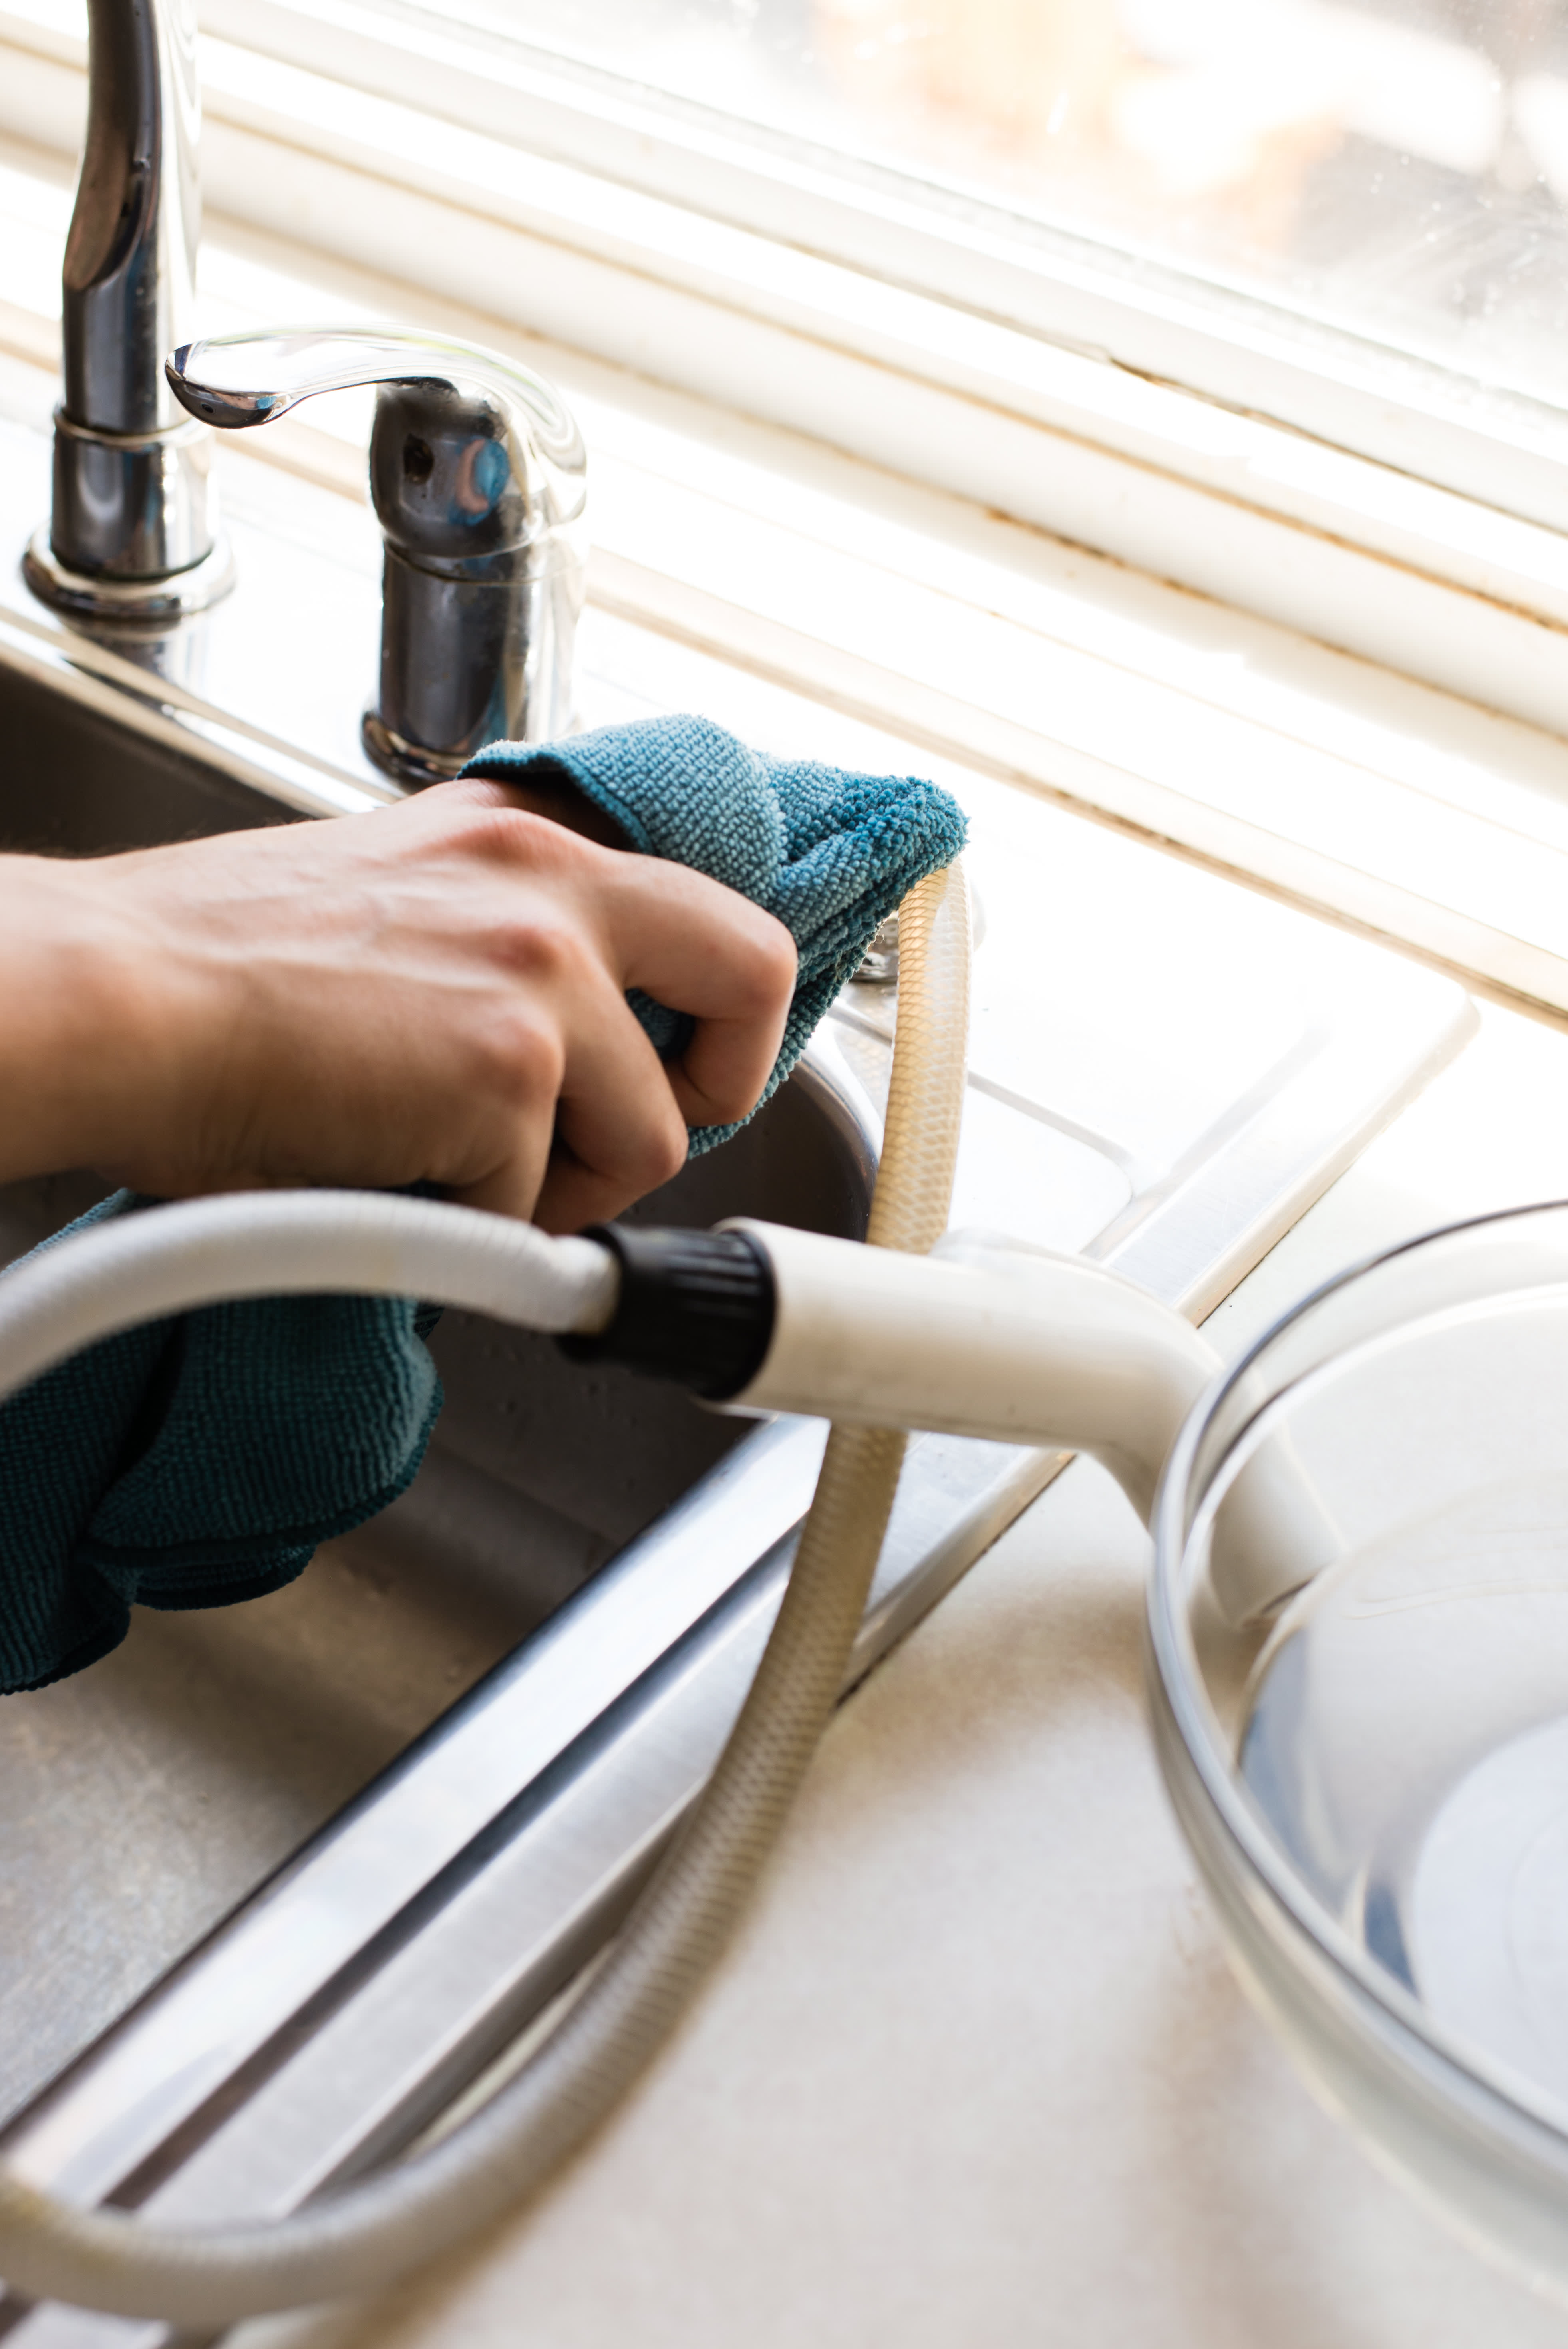 How To Clean Your Kitchen Sink Sprayer Kitchn